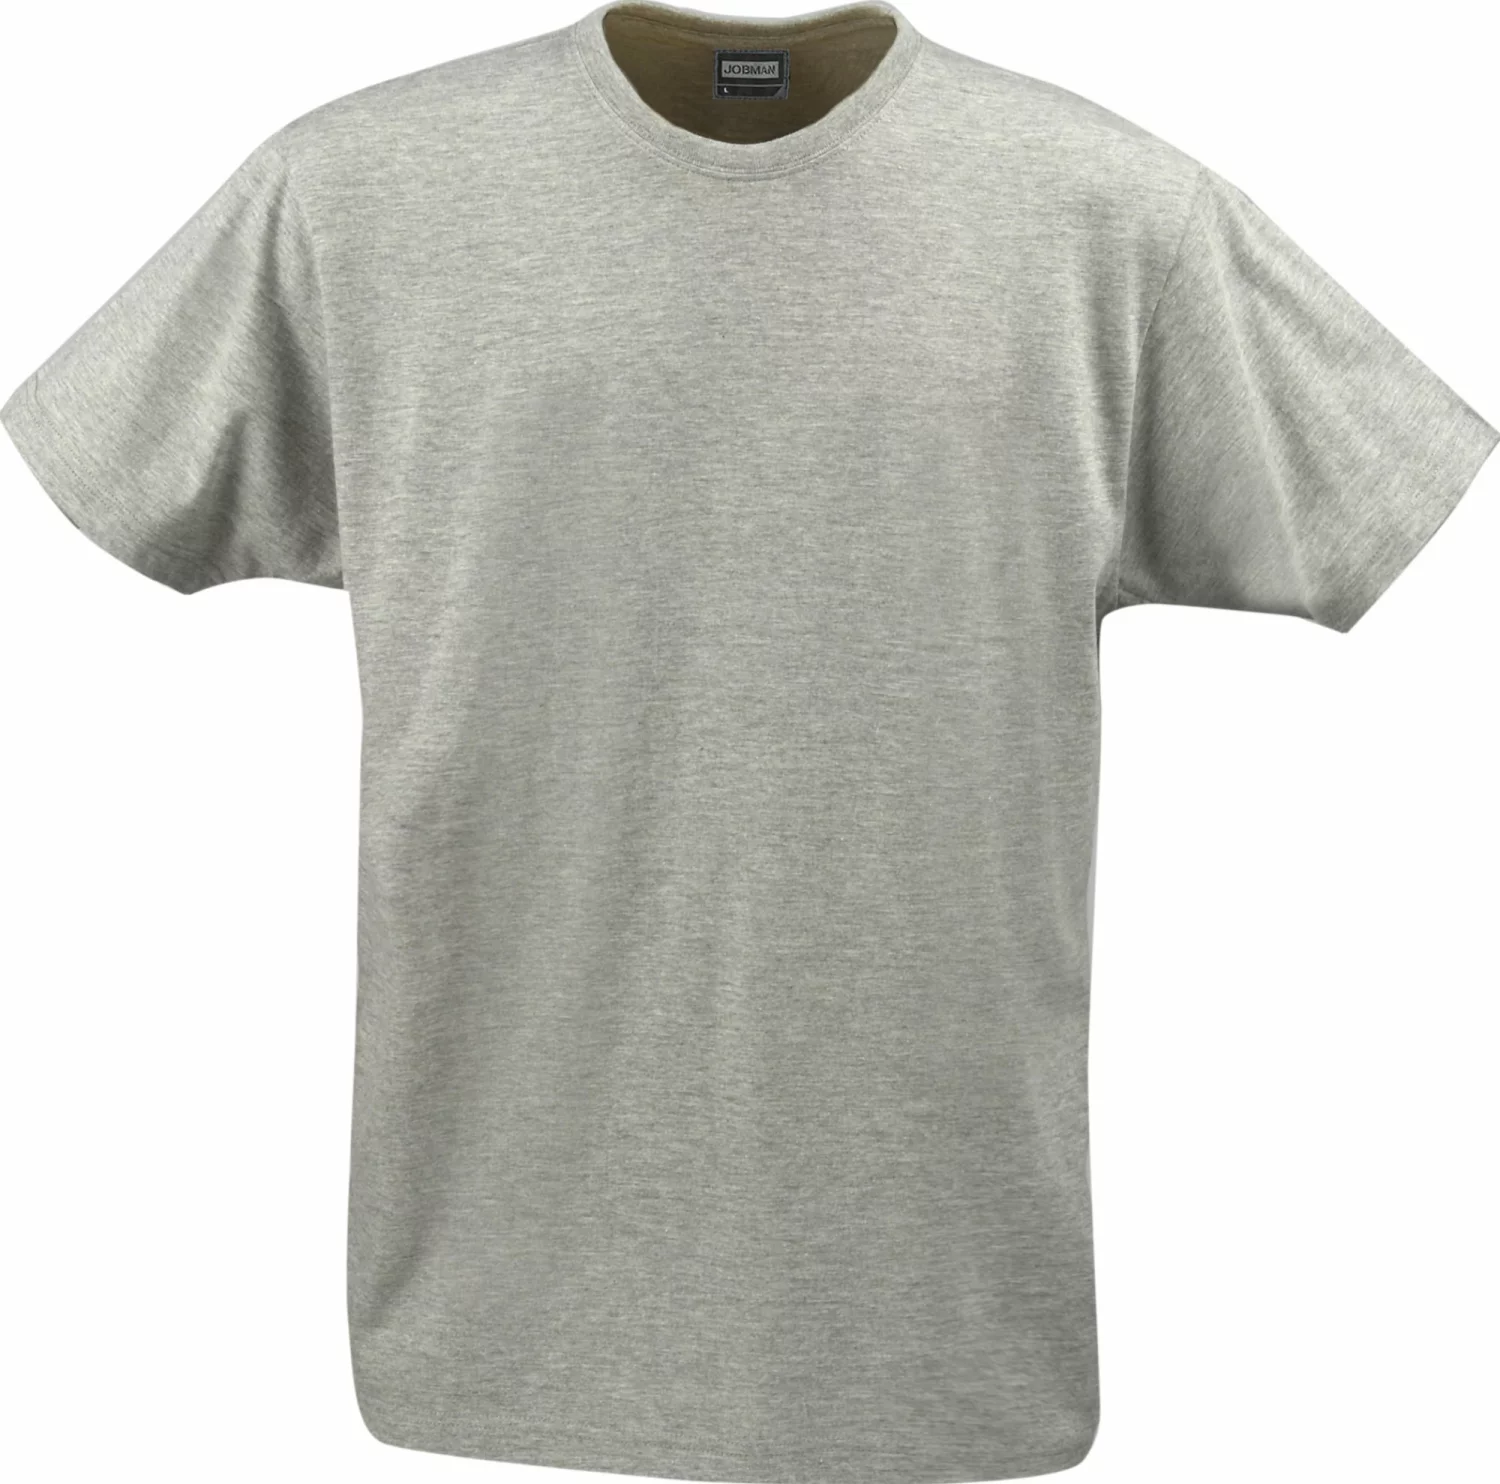 Jobman 5264 T-Shirt - Maat XL - Grijs